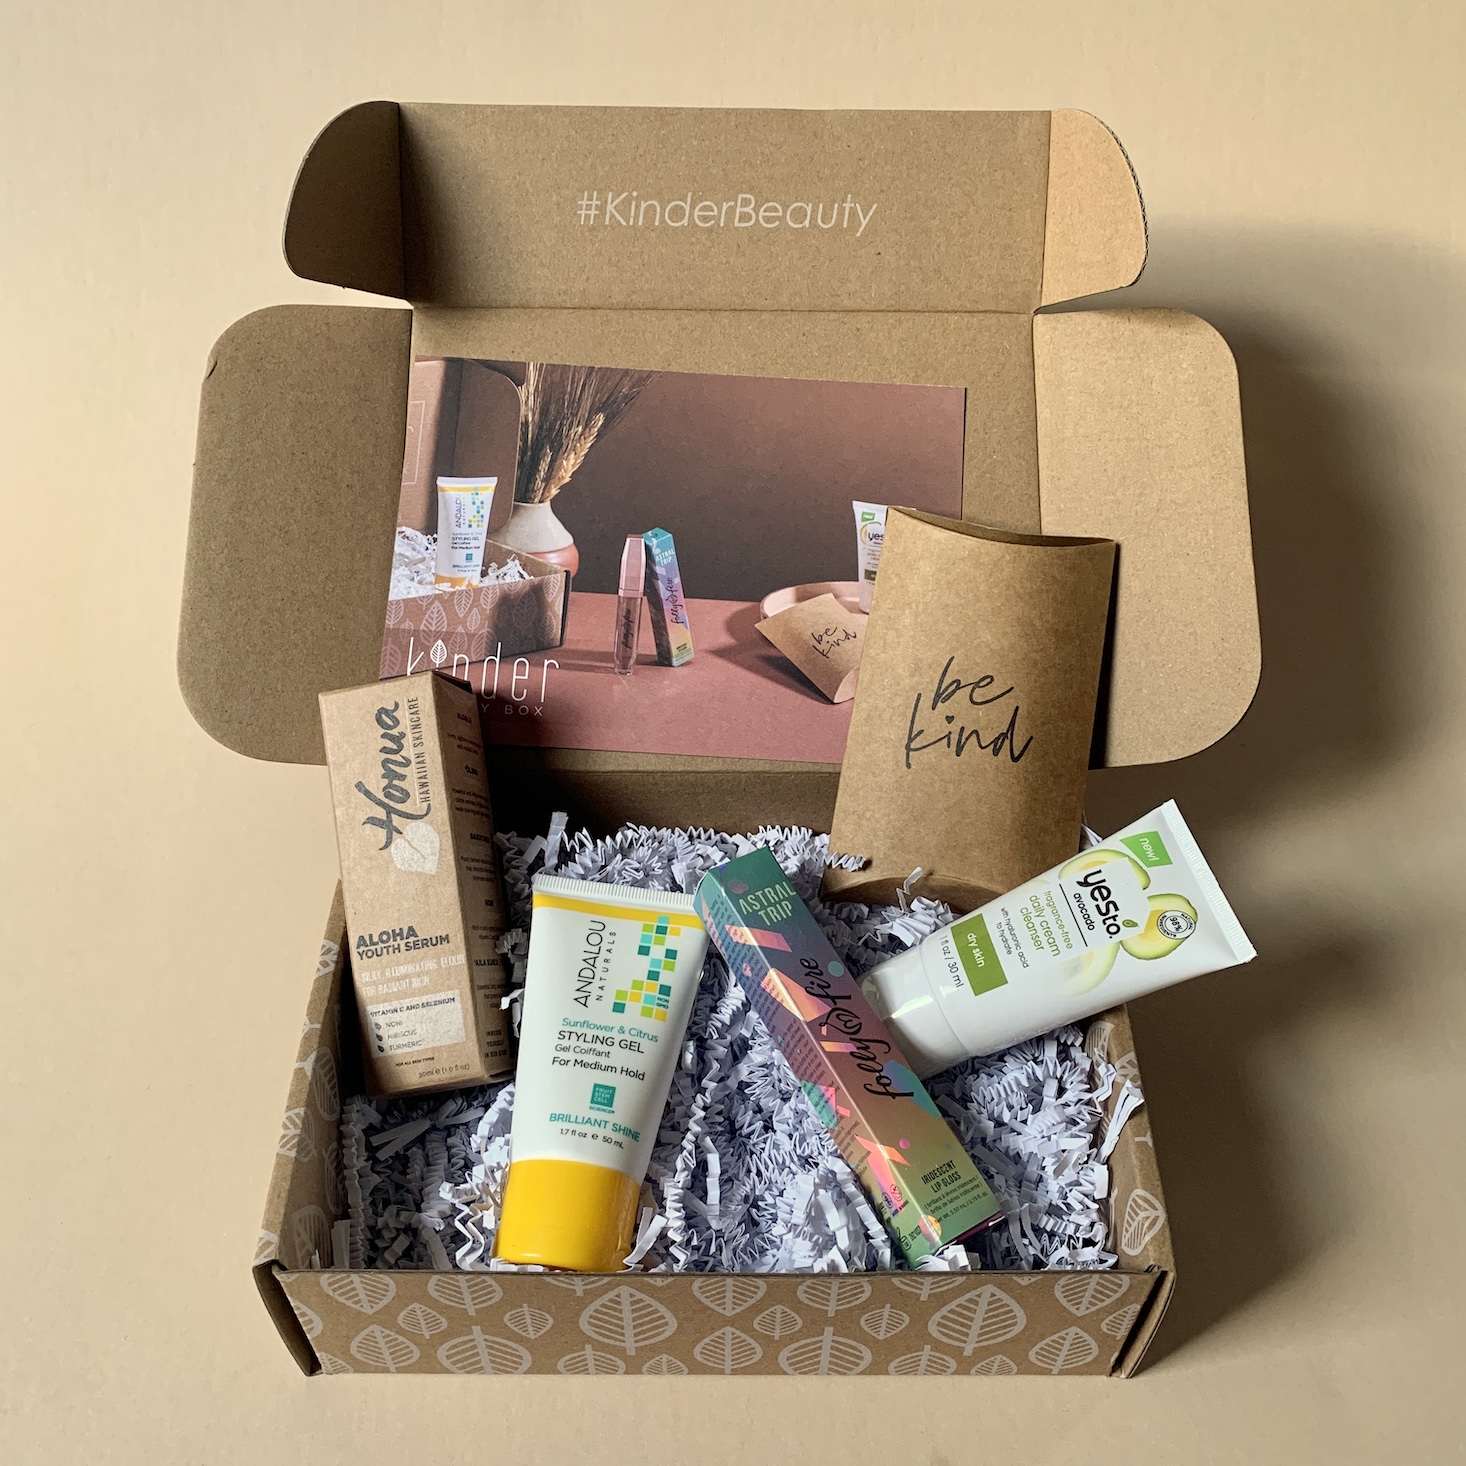 Kinder Beauty Box “Restore Box” Review + Coupon